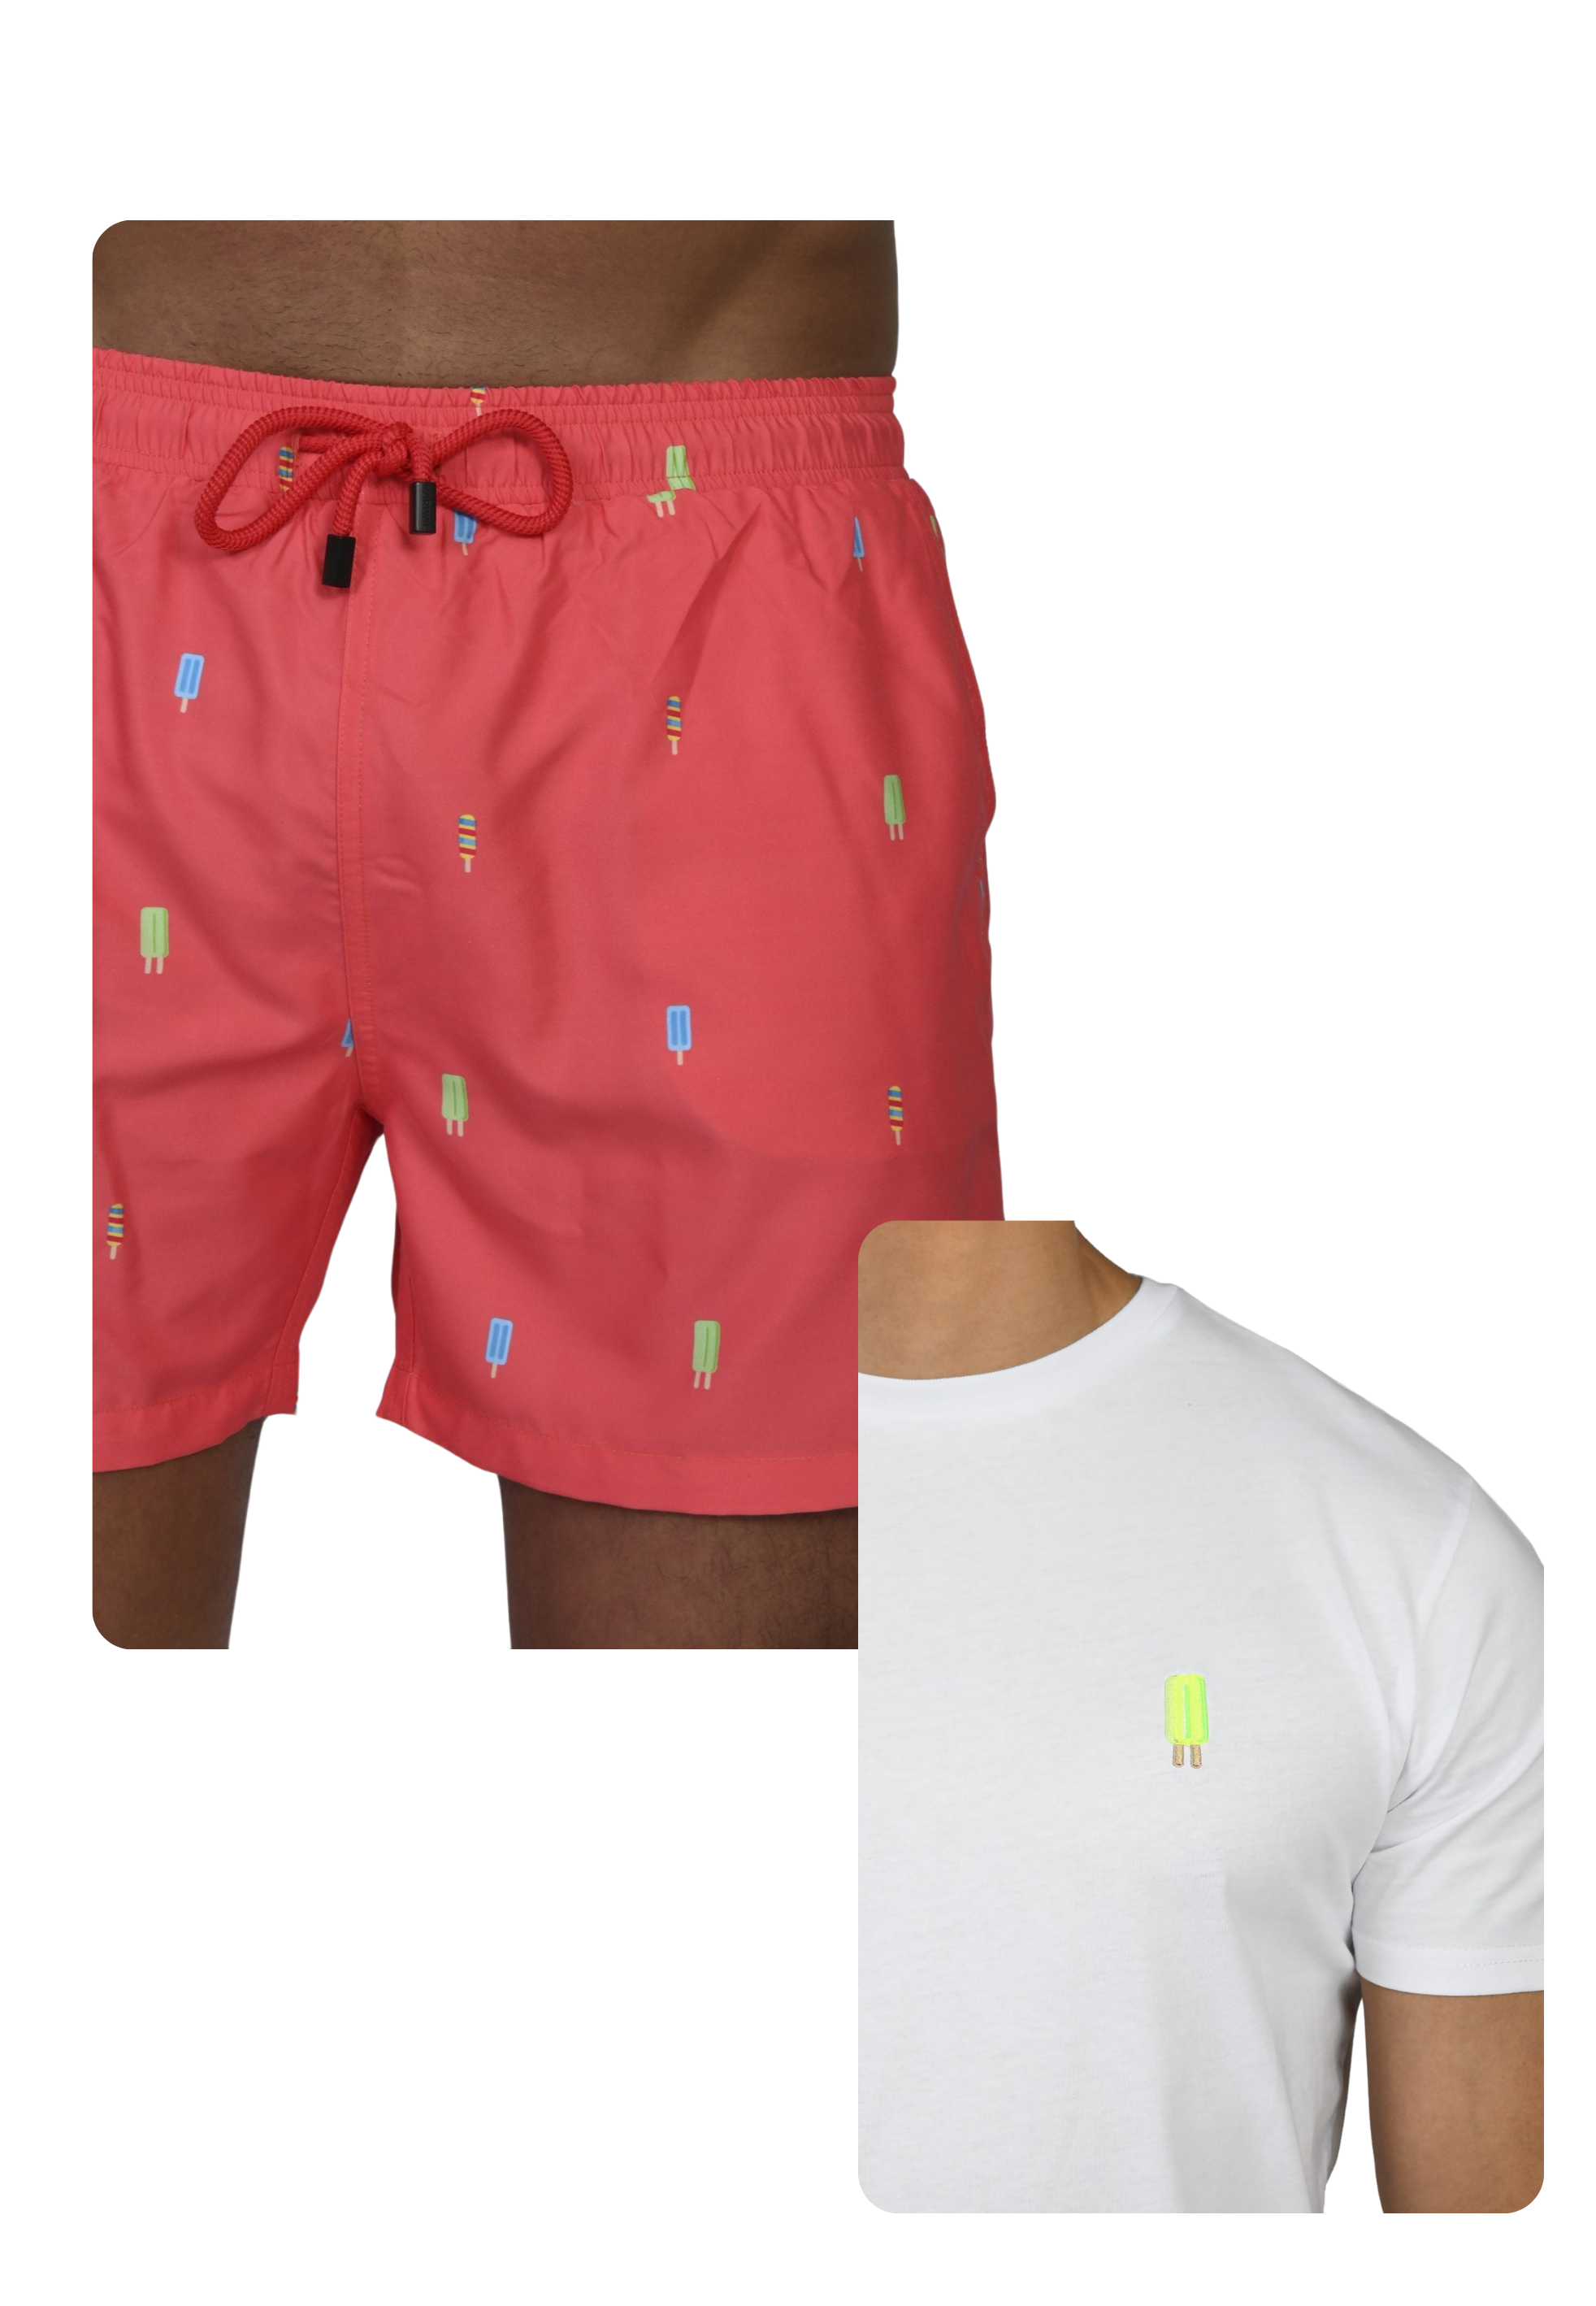 Popsicle Swim Trunks and T-shirt Bundle